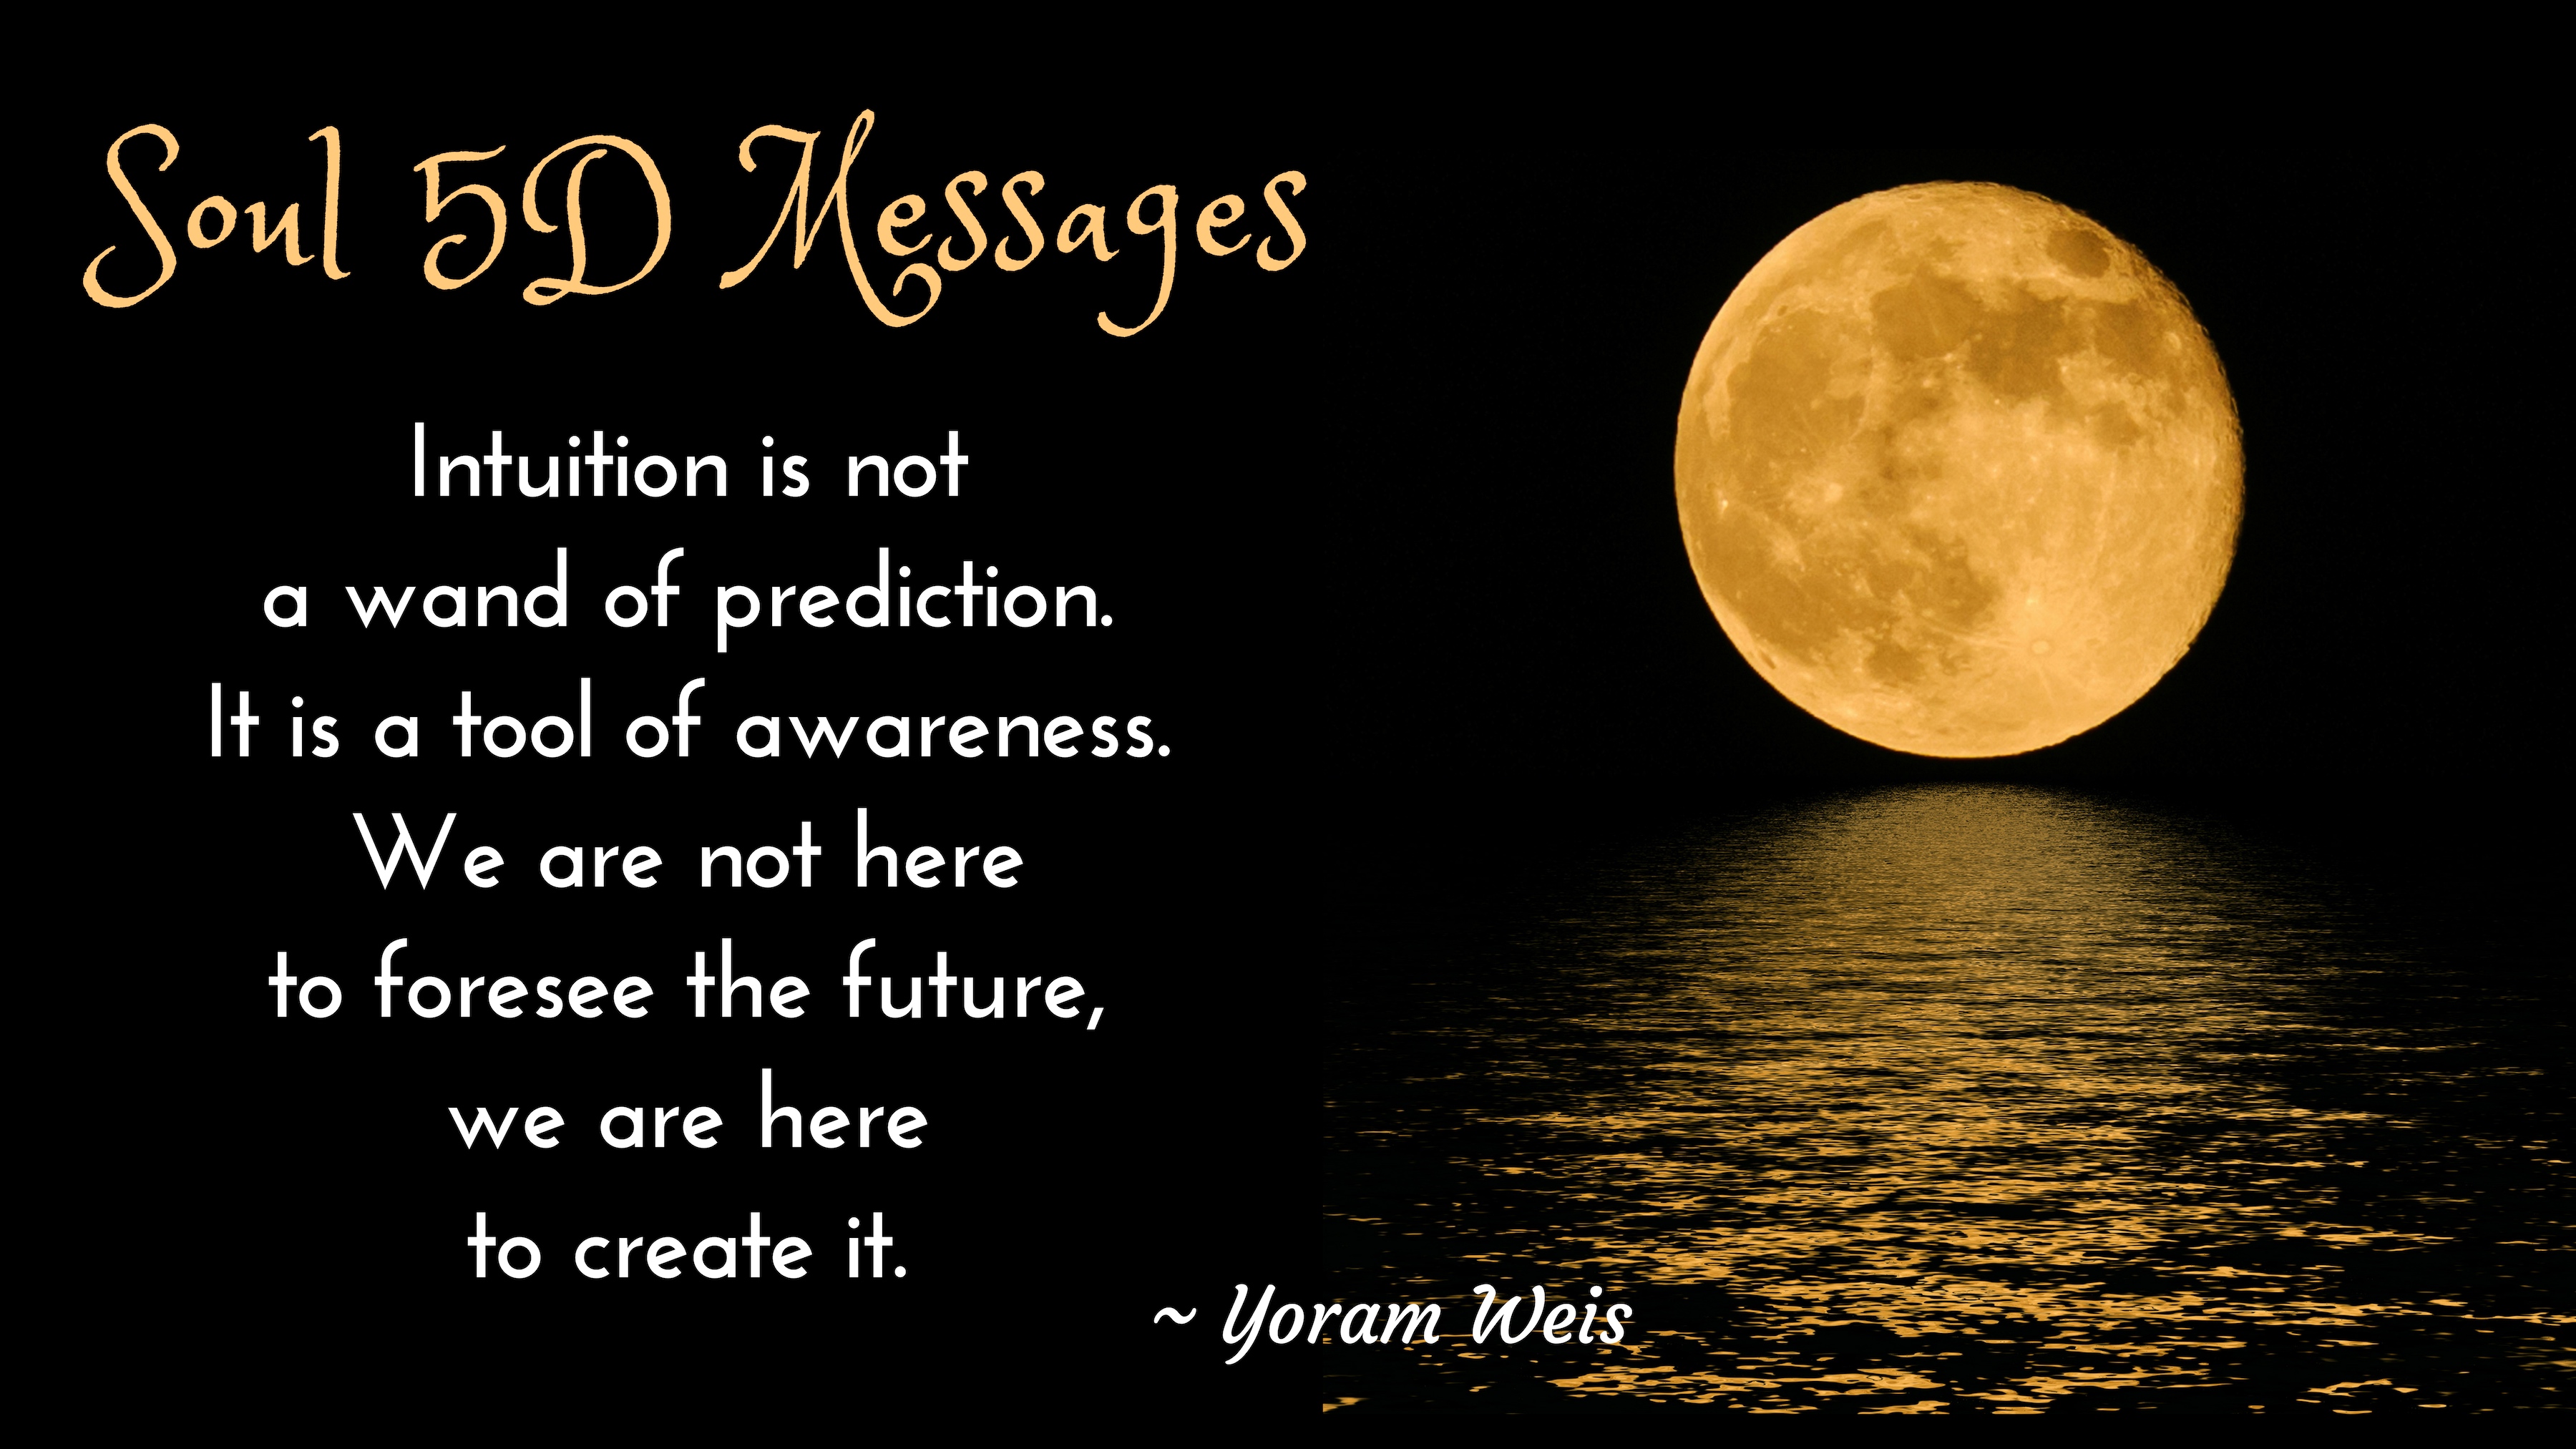 Soul 5D Inspirational Messages_Intuition